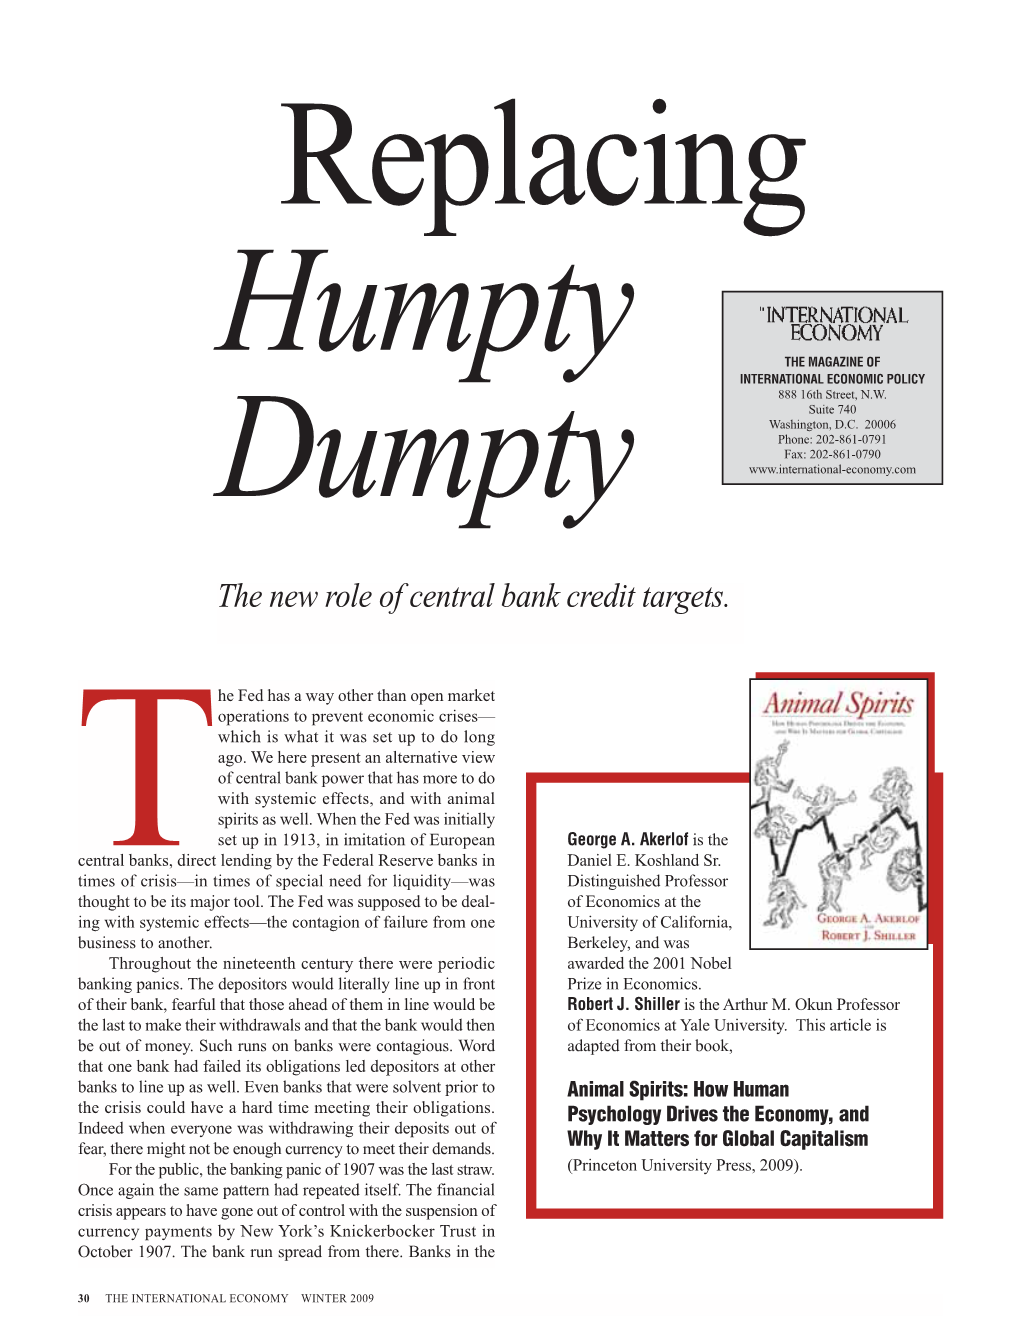 Replacing Humpty Dumpty